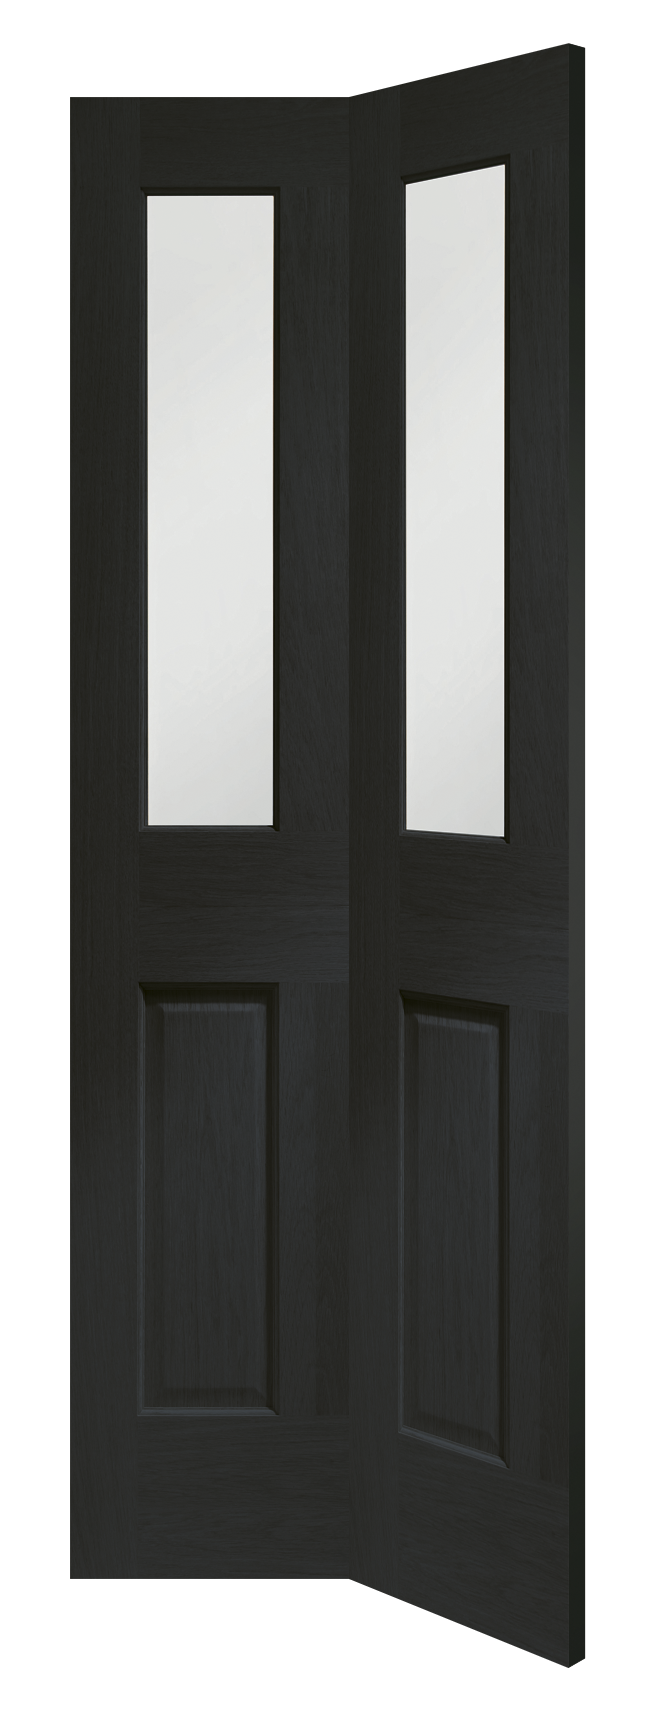 Malton Bi-Fold Internal Oak Door with Clear Bevelled Glass – Americano, 1981 x 762 x 35 mm